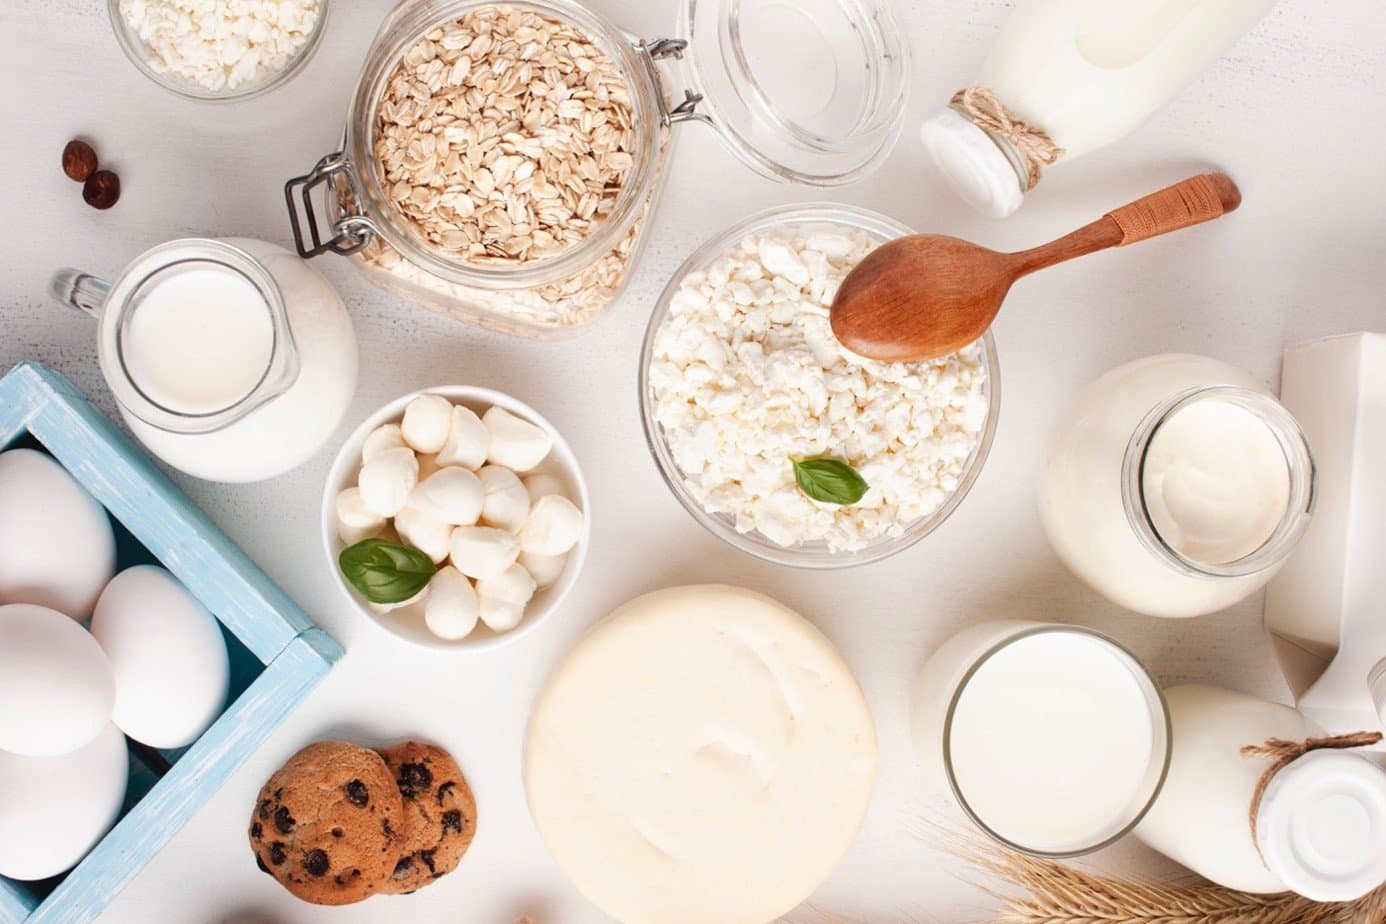 What food has the highest content of calcium